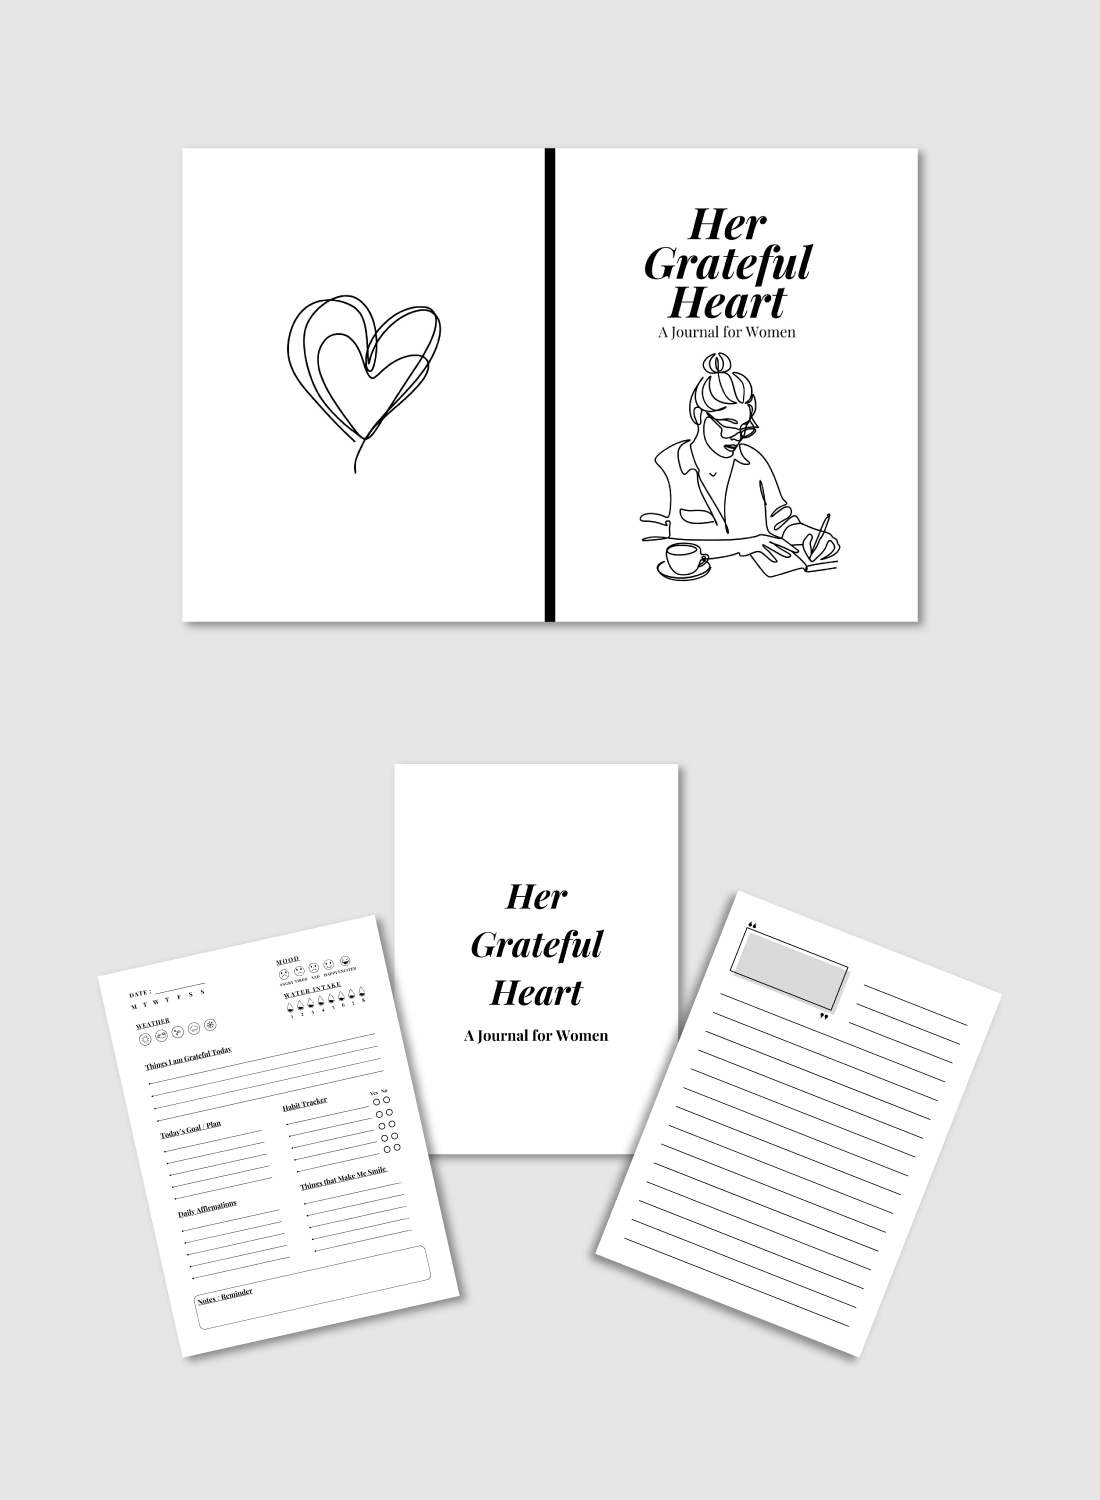 her grateful heart journal for women pinterest preview image.